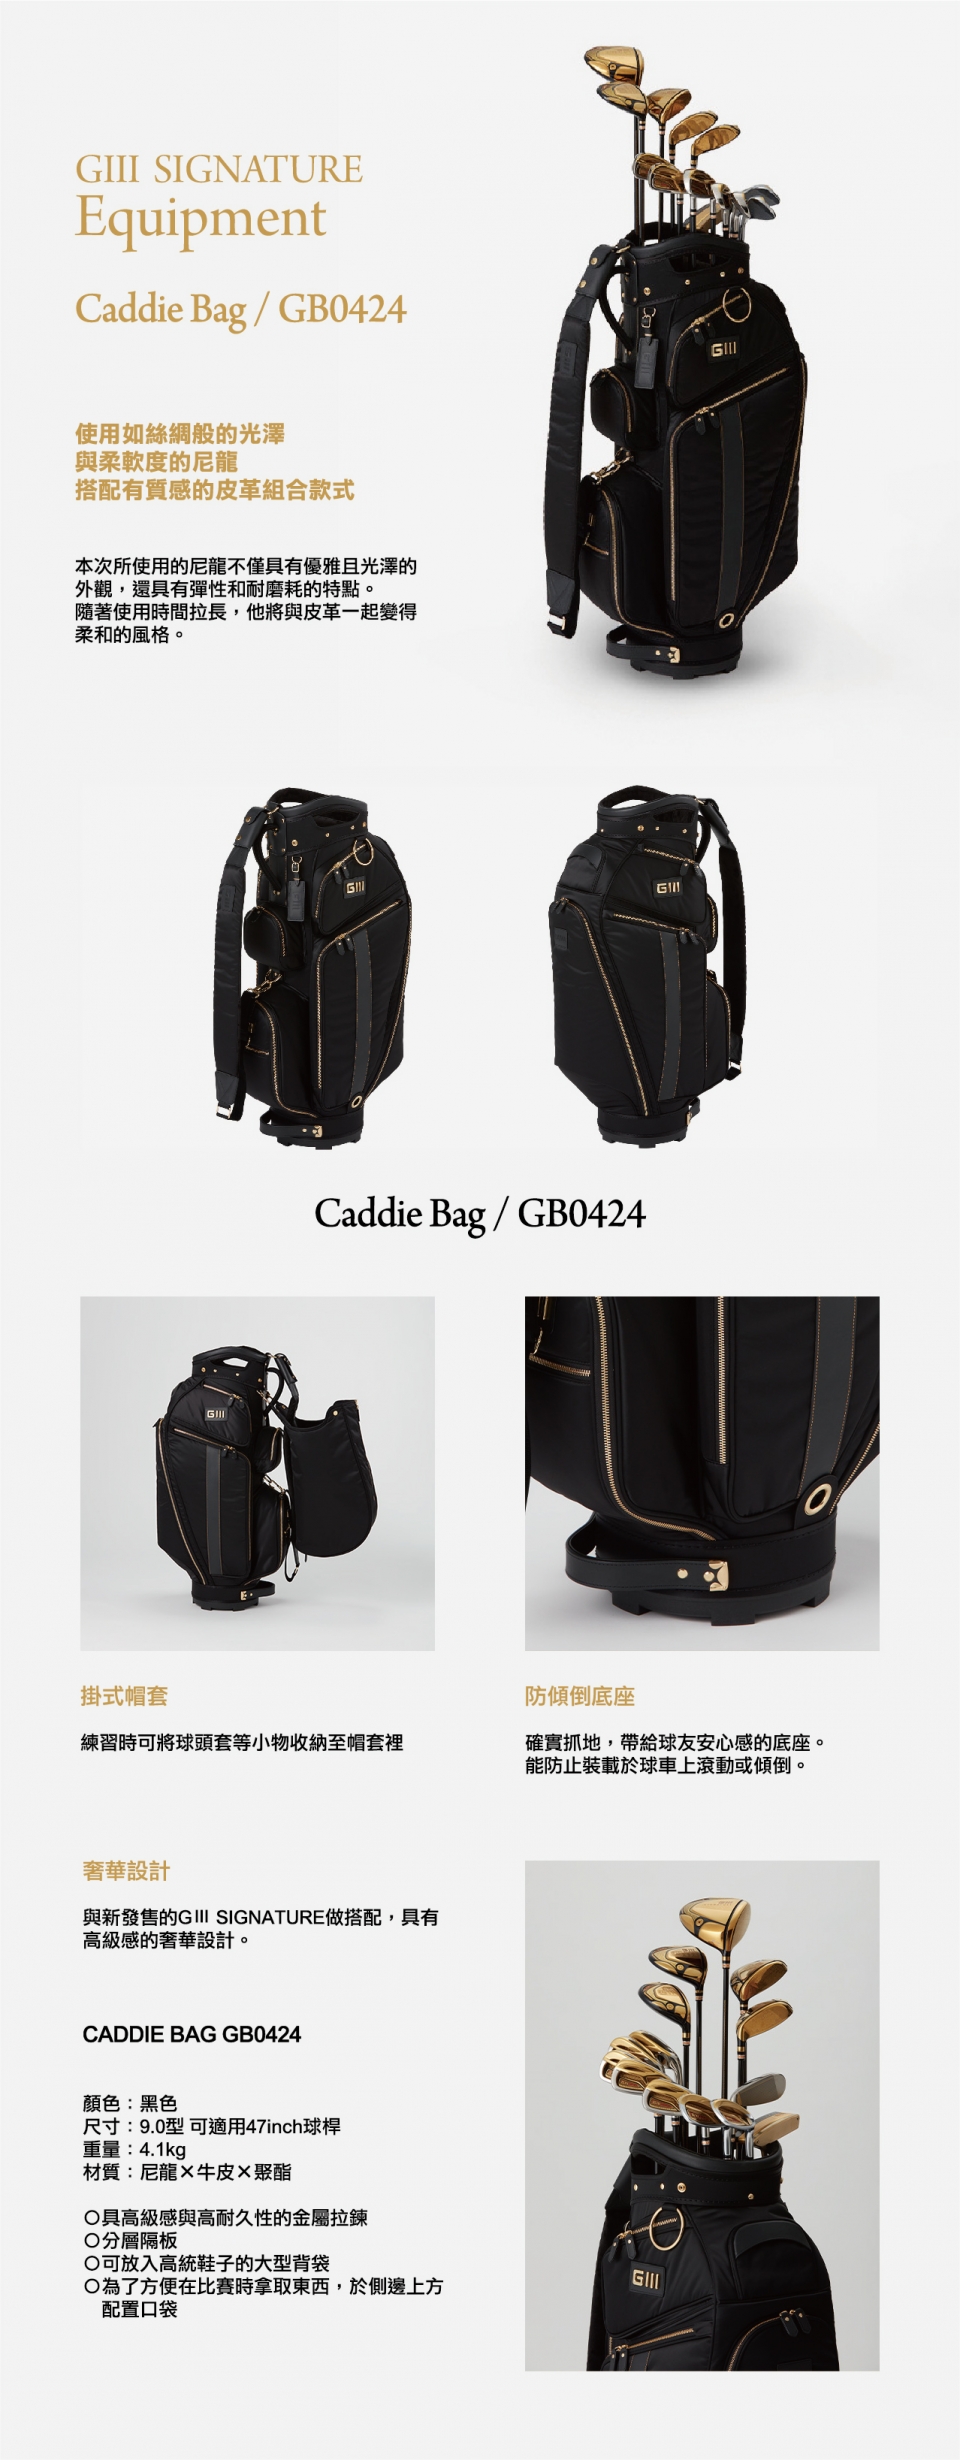 24 GIII系列-Equipment_1-Caddie Bag - GB0424